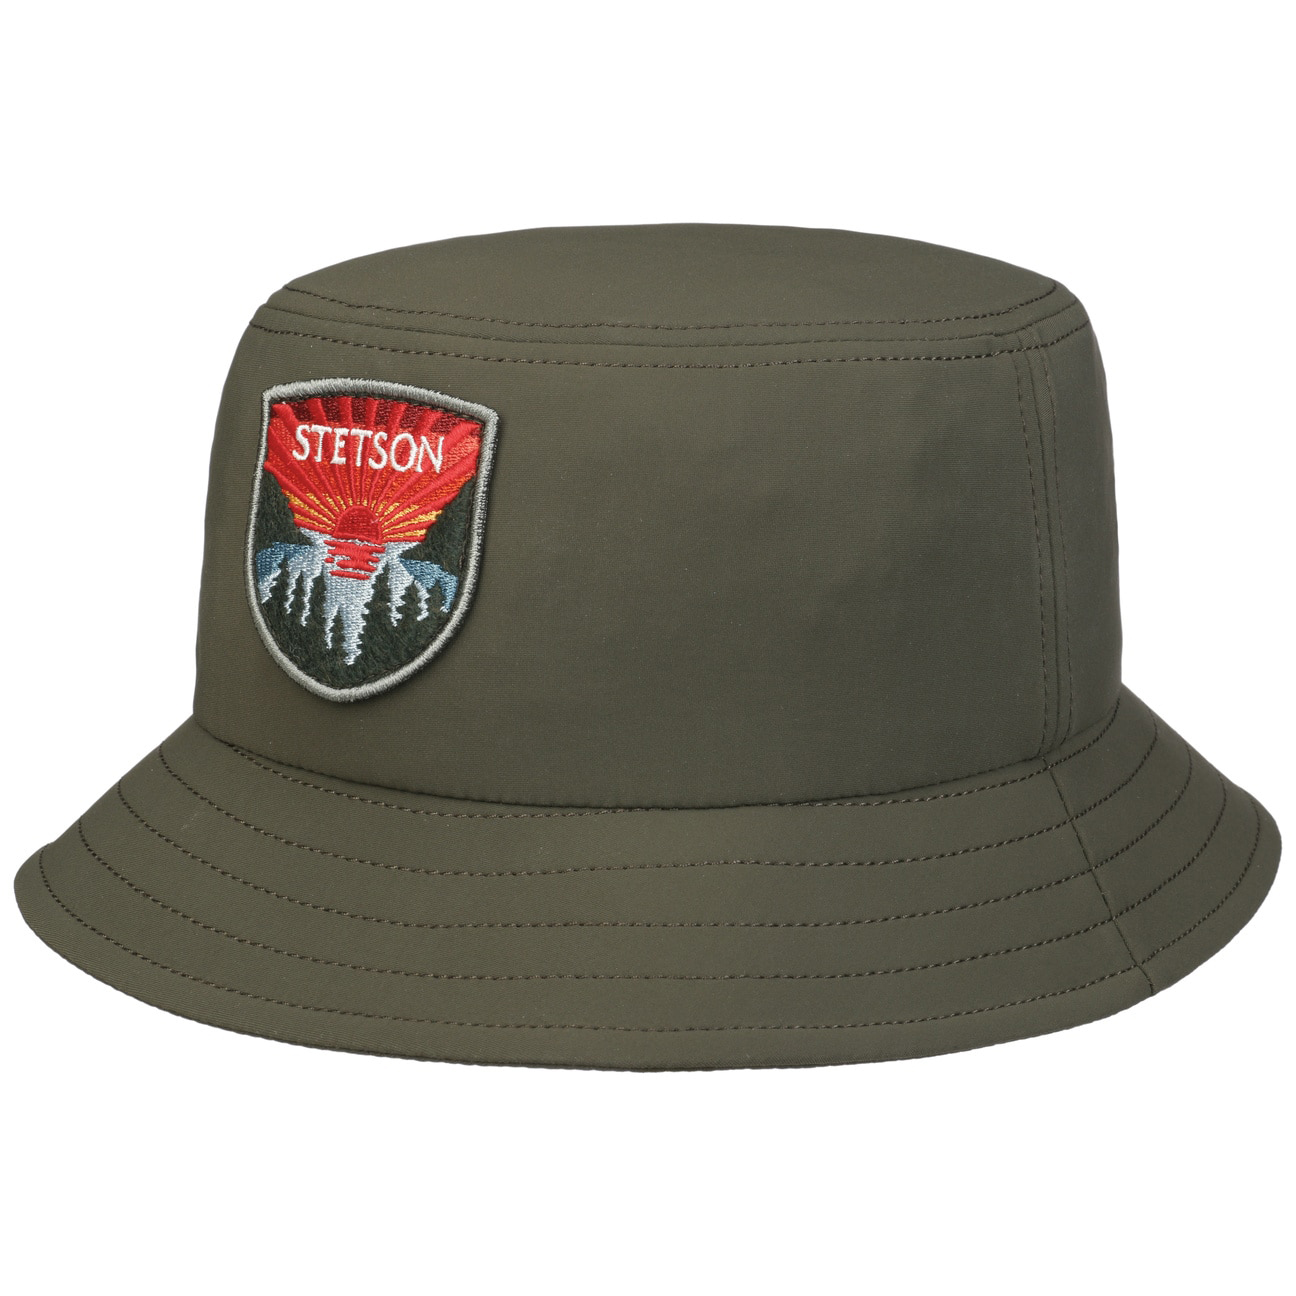 Stetson - Jersey Bucket Hat - Olive